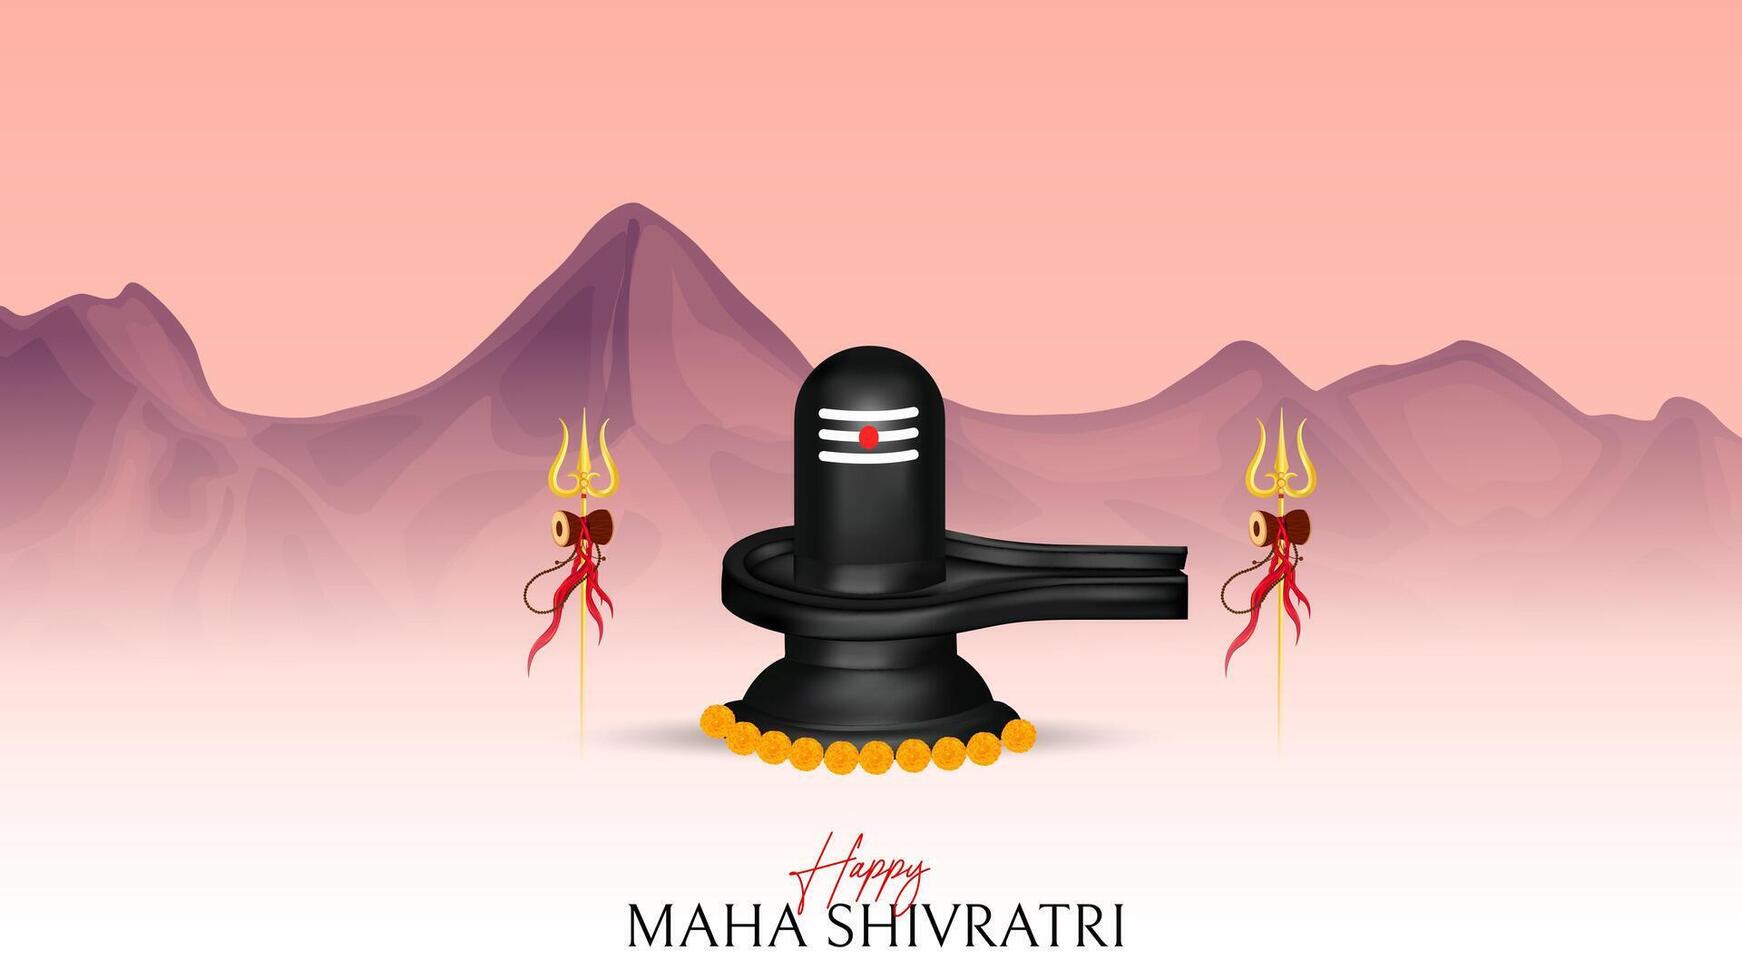 contento maha shivratri maja, shivaratri deseos, contento maha shivratri social medios de comunicación enviar , shivratri web bandera, historia, impresión vector